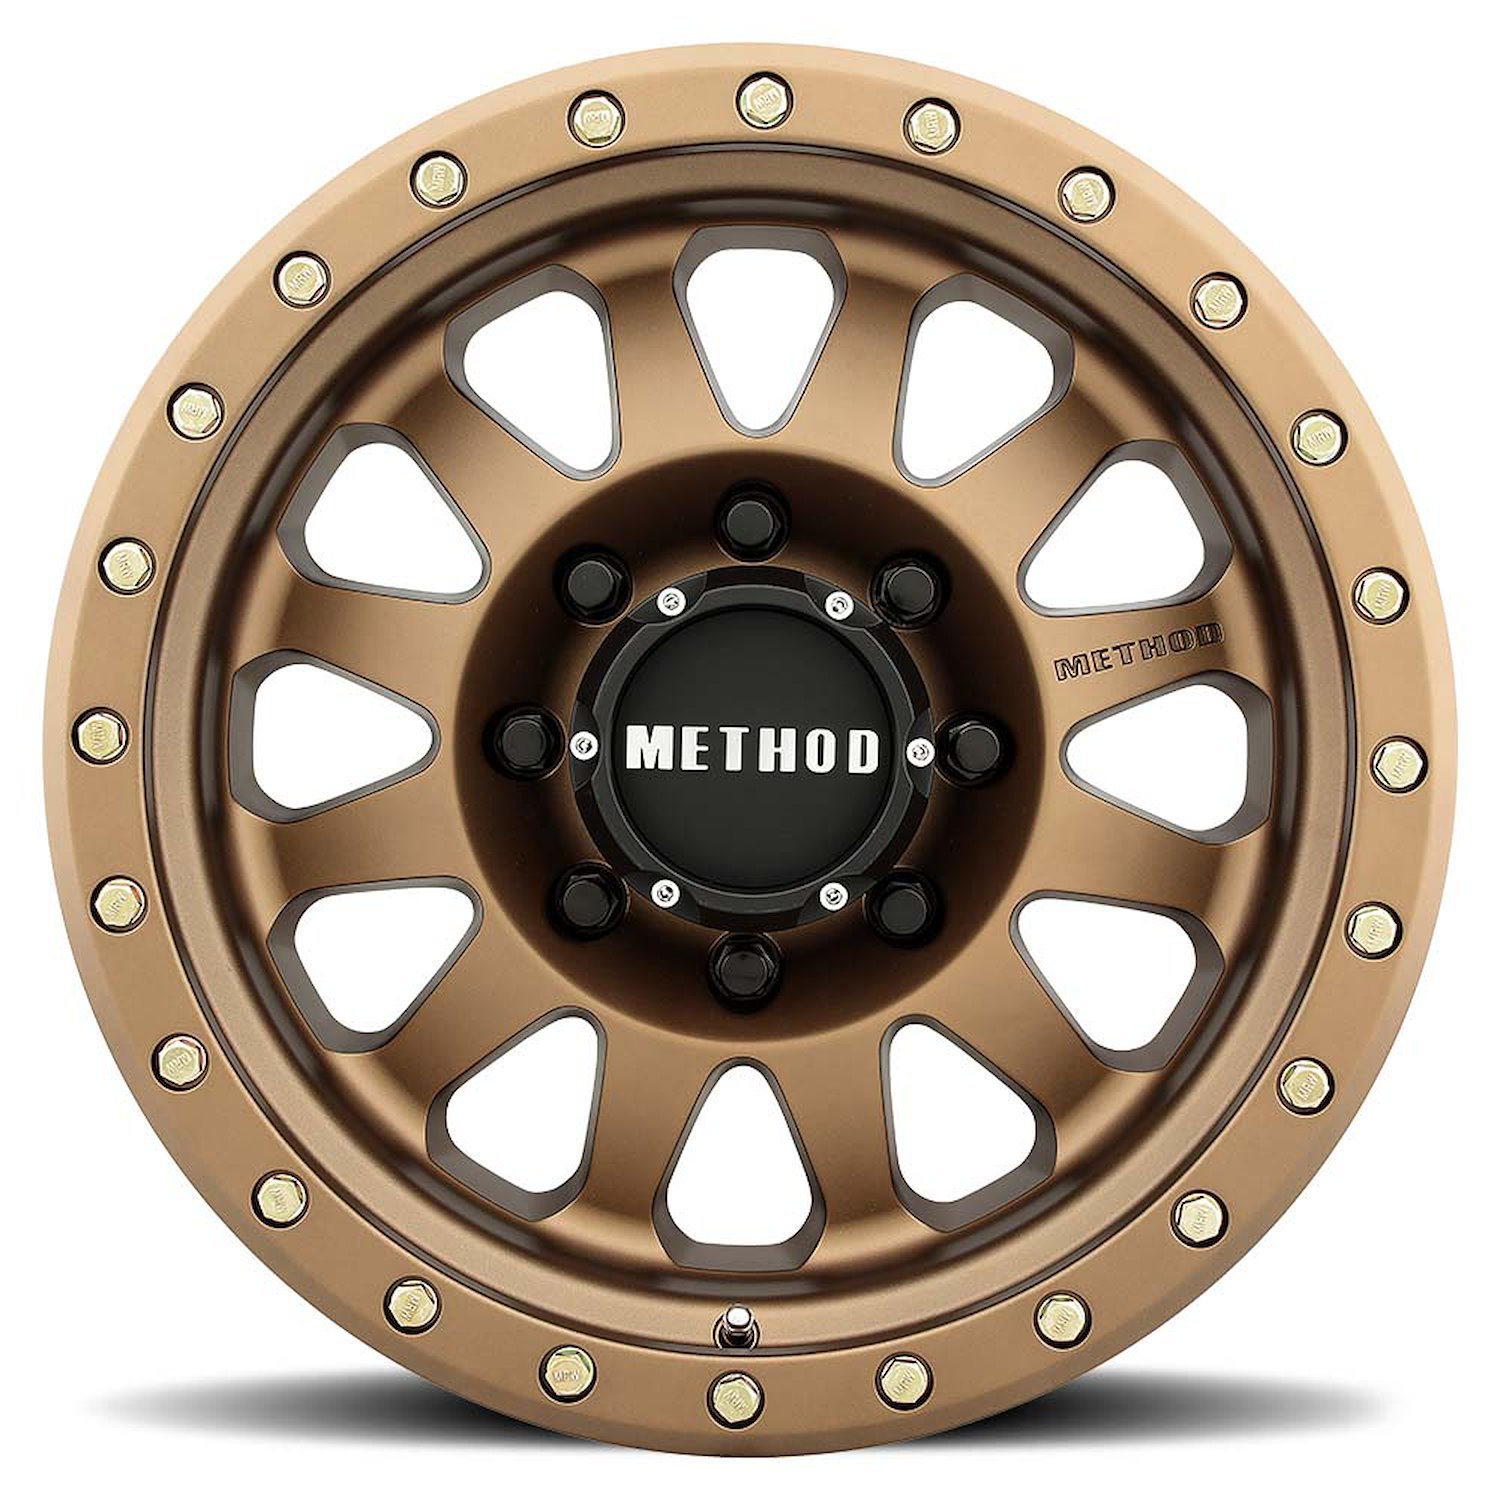 MR30478587900 STREET MR304 Double Standard Wheel [Size: 17" x 8.5"] Method Bronze